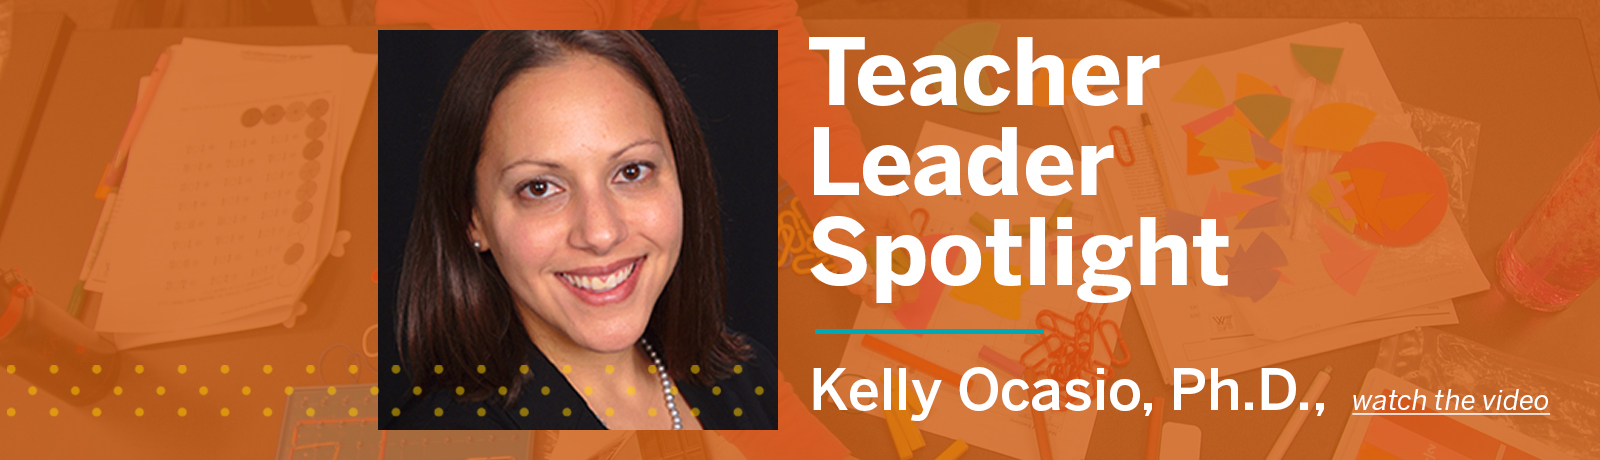 Teacher Leader Spotlight: Kelly Ocasio, Ph.D. - Watch the video